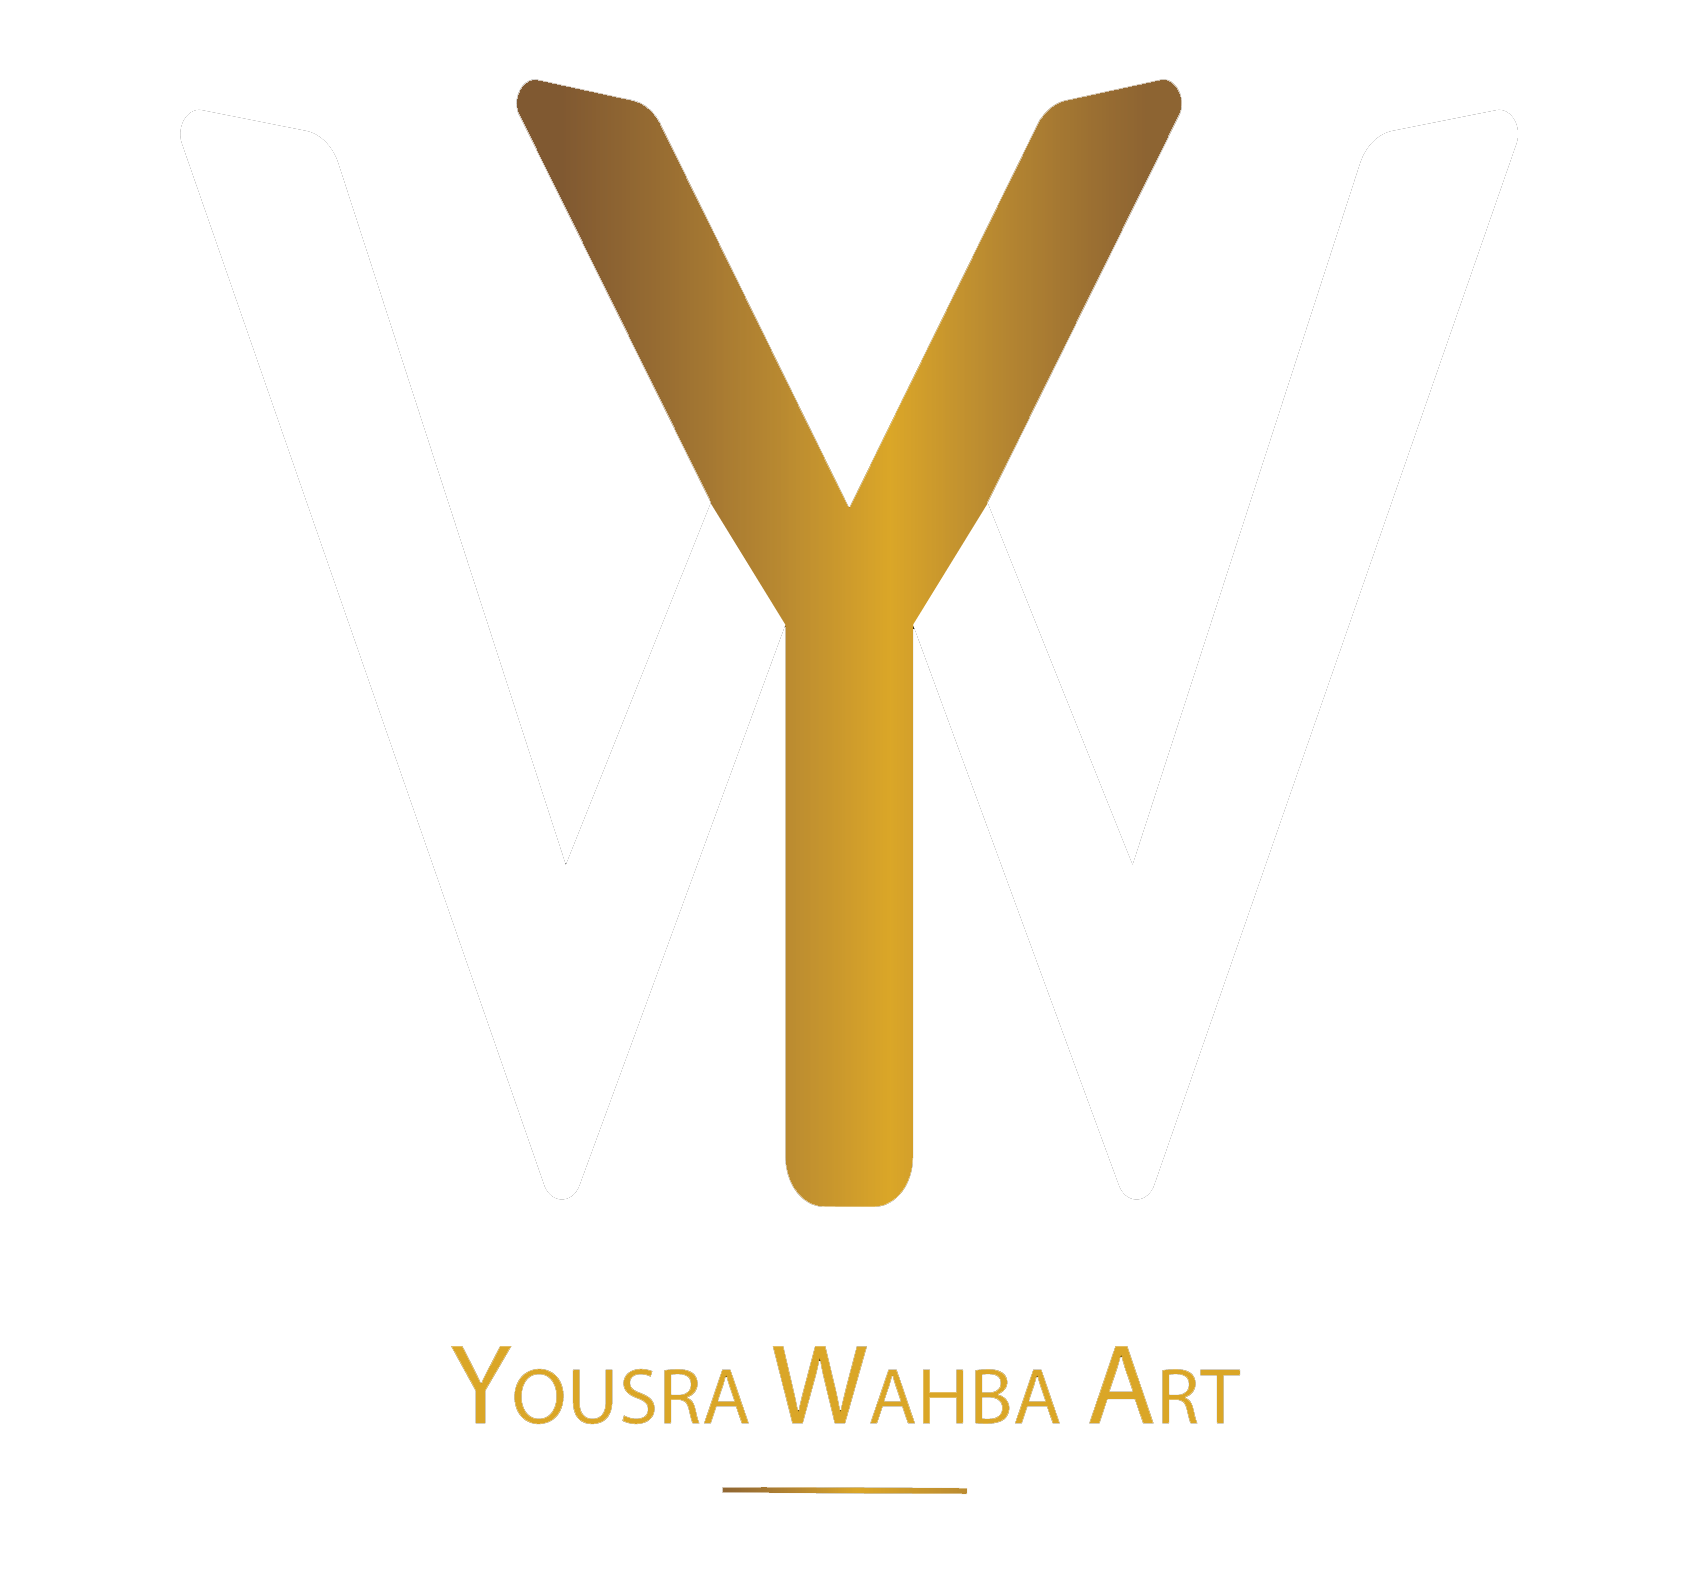 Yousra Wahba Art